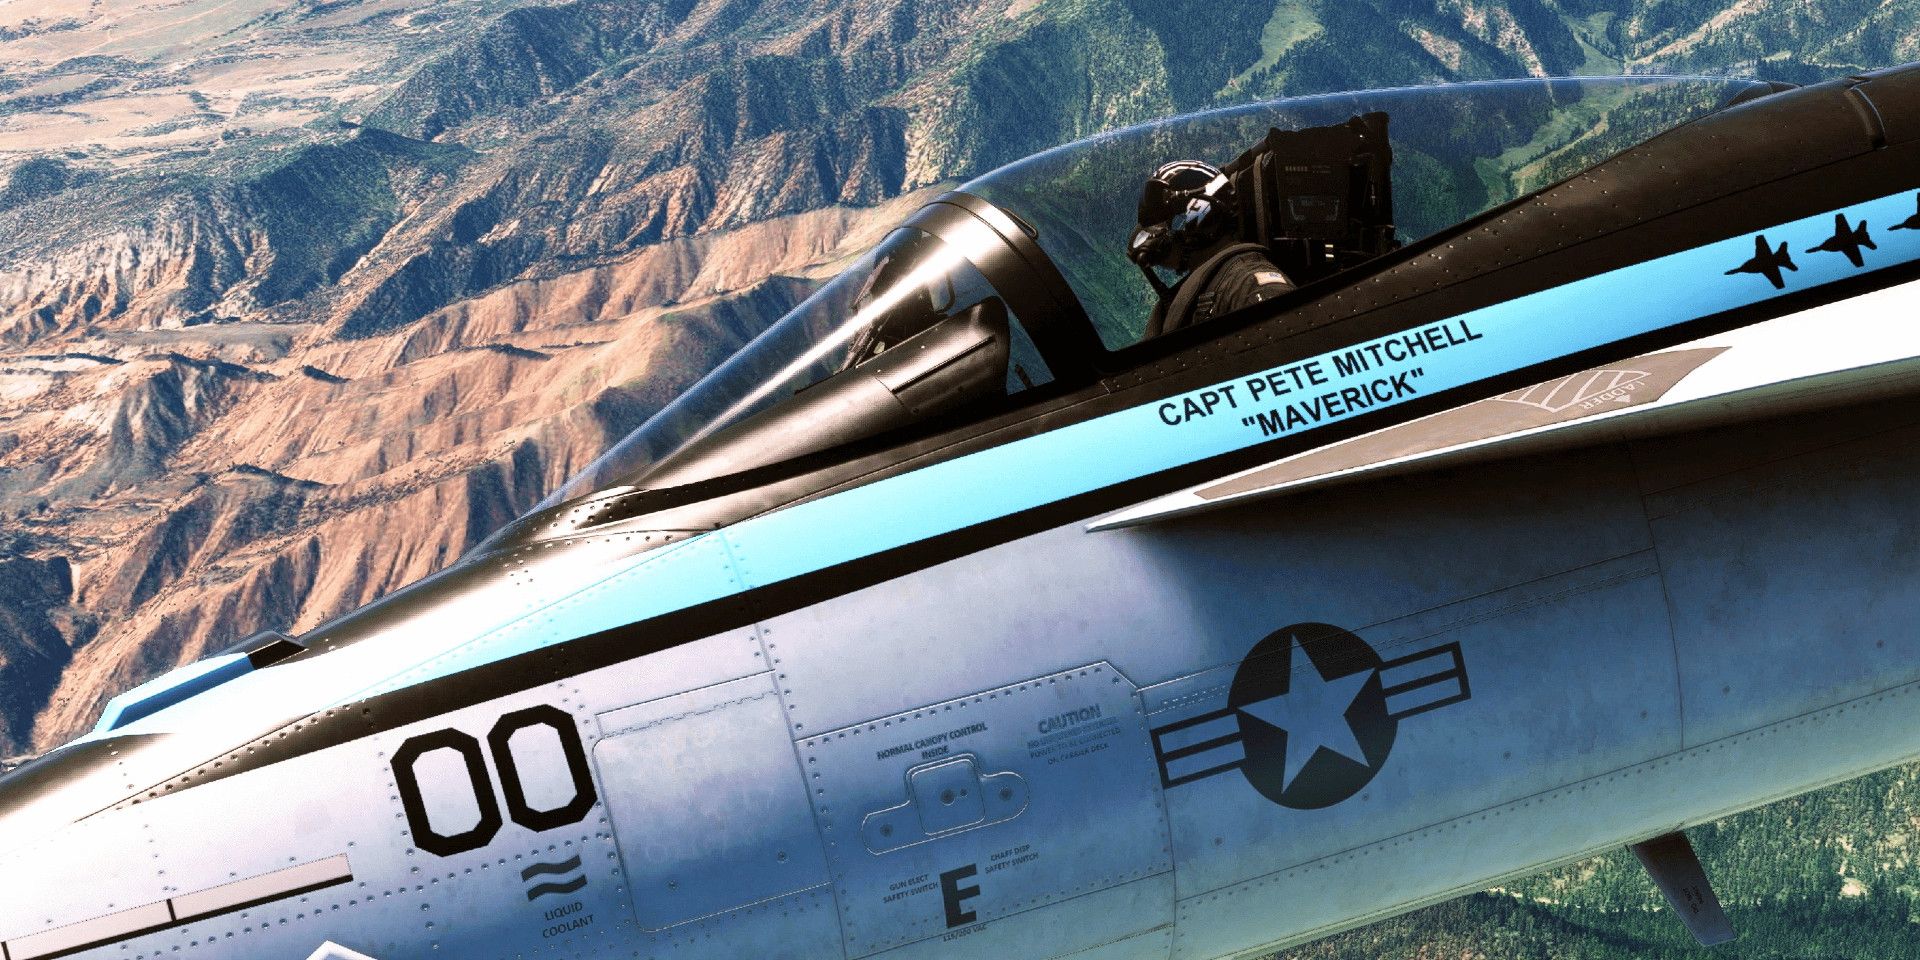 Pete Maverick Mitchell's plane from Top Gun